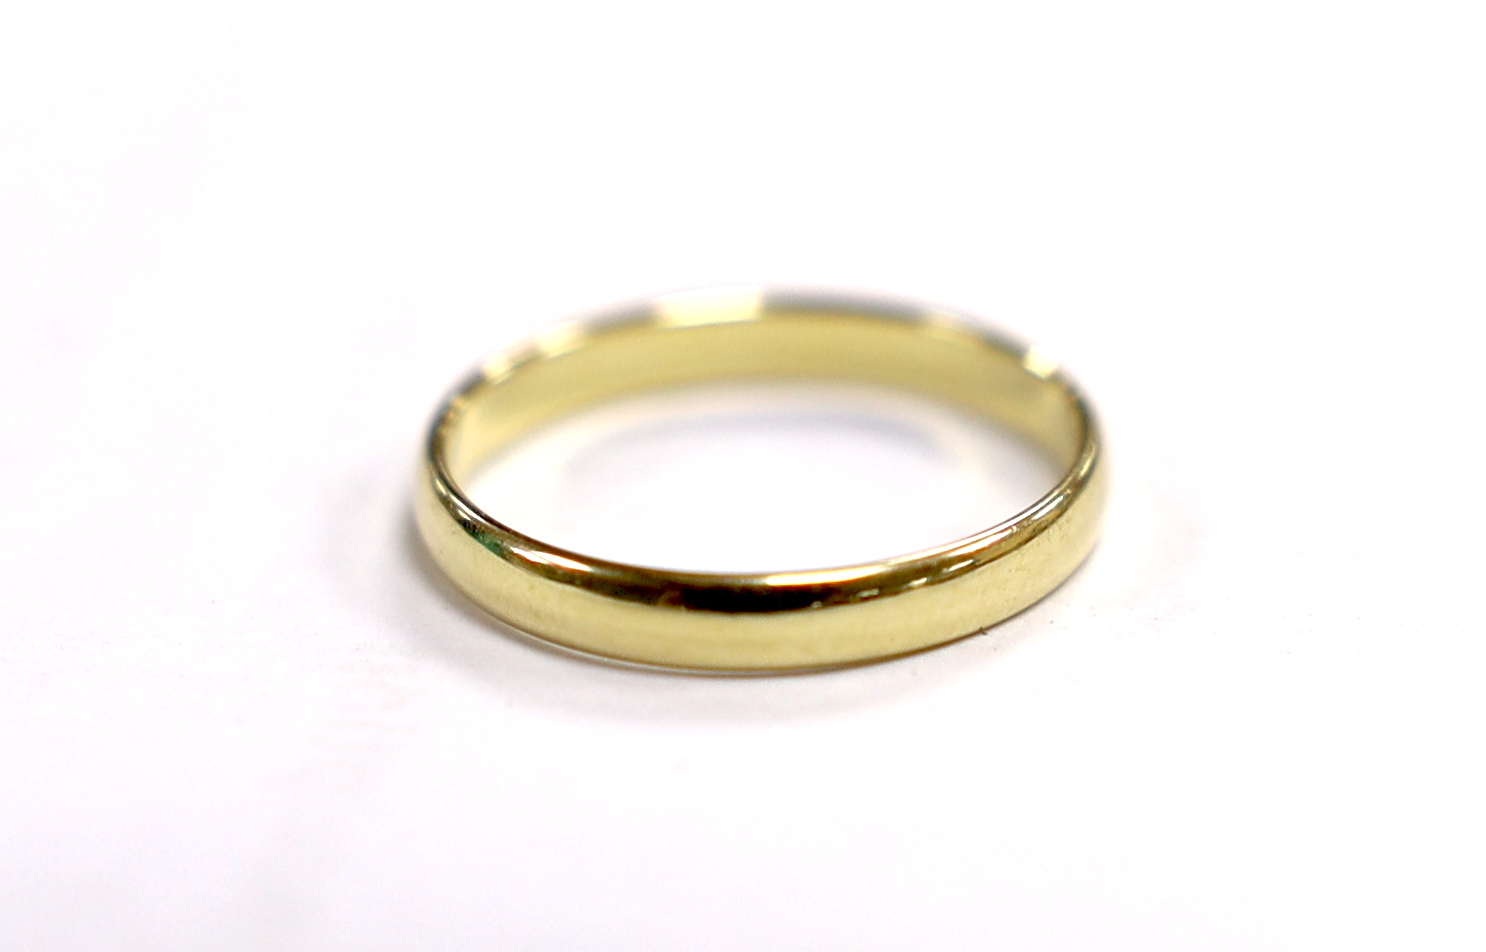 A 585 yellow metal wedding band, size M/N, 1.6 grams.